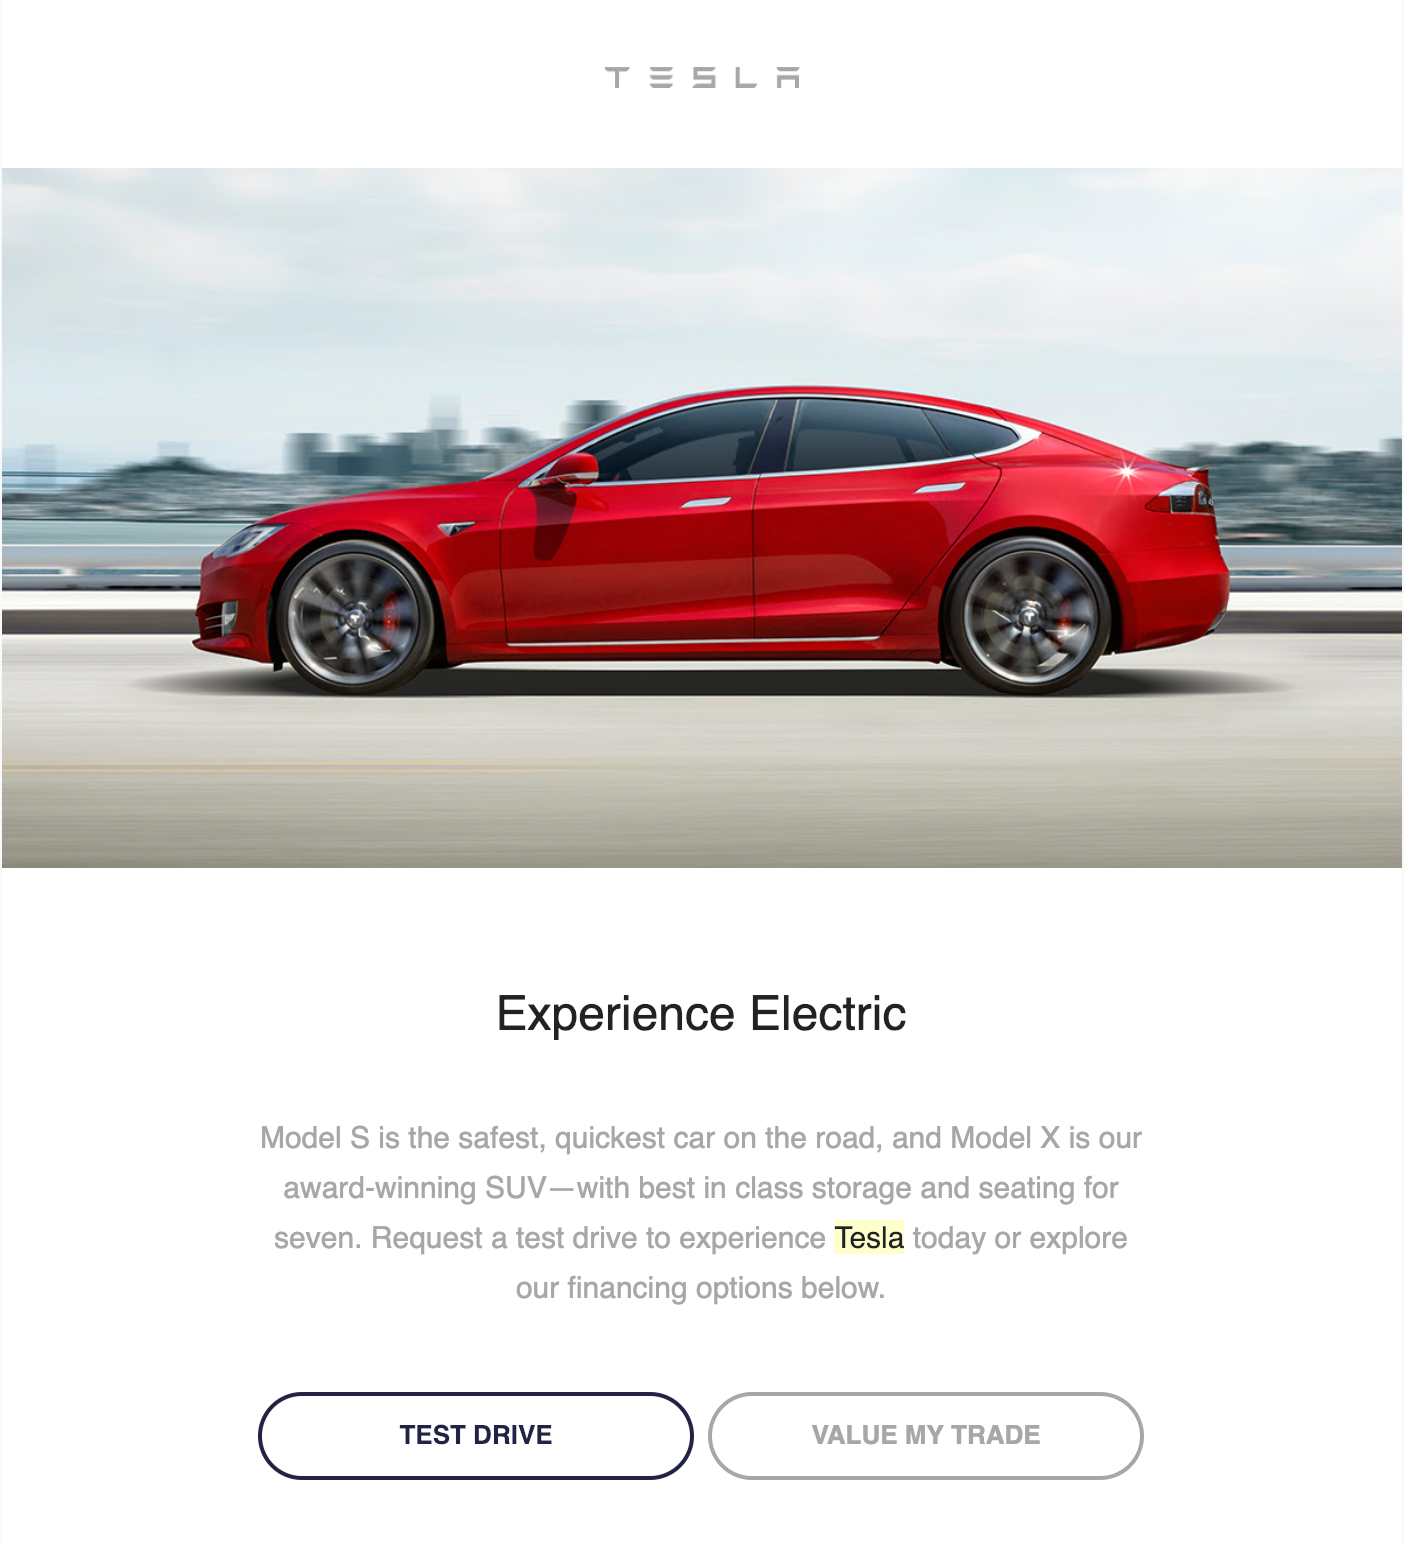 Tesla Updates 1 Billion Miles on Autopilot ian jacob searchandbefound com au Search amp Be Found Mail